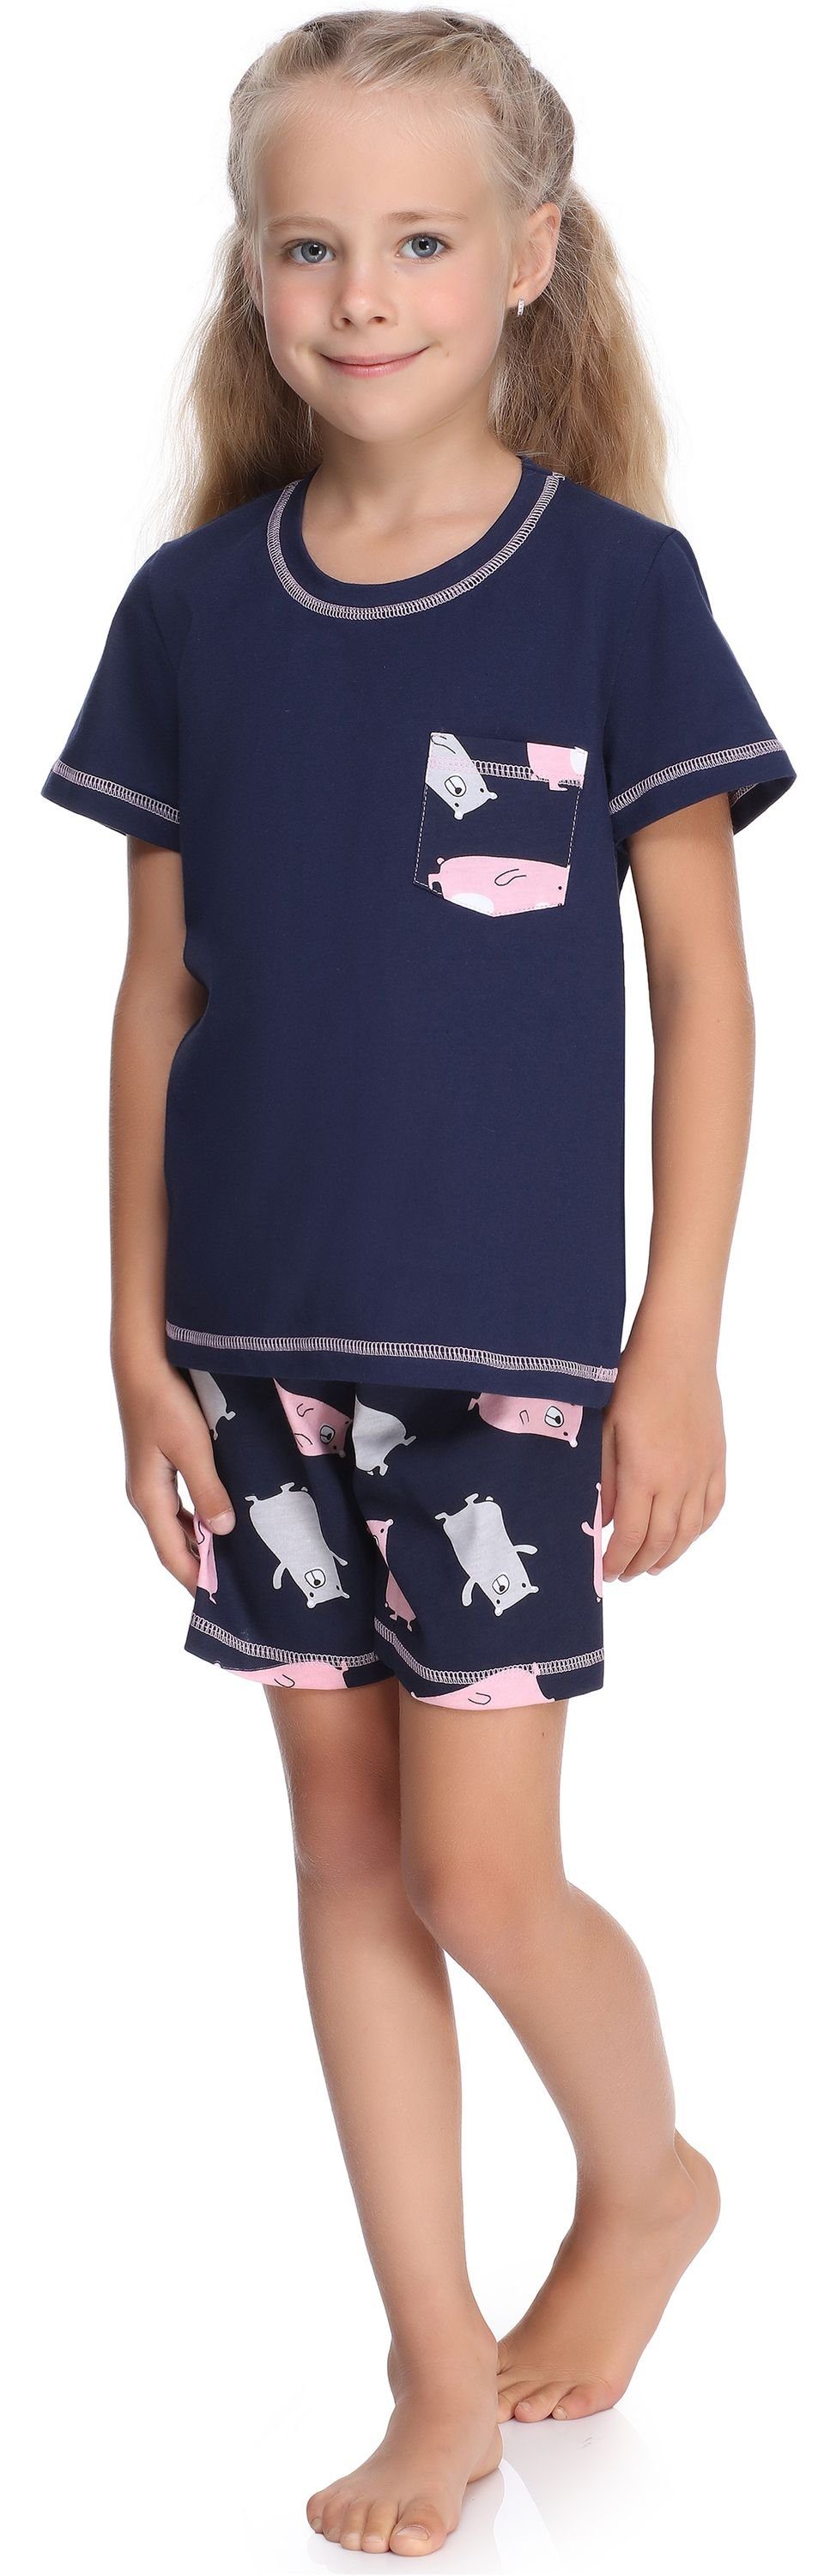 Style Marineblau/Teddybär Set Schlafanzüge Mädchen Kurz Pyjama Baumwolle Schlafanzug aus Merry MS10-292